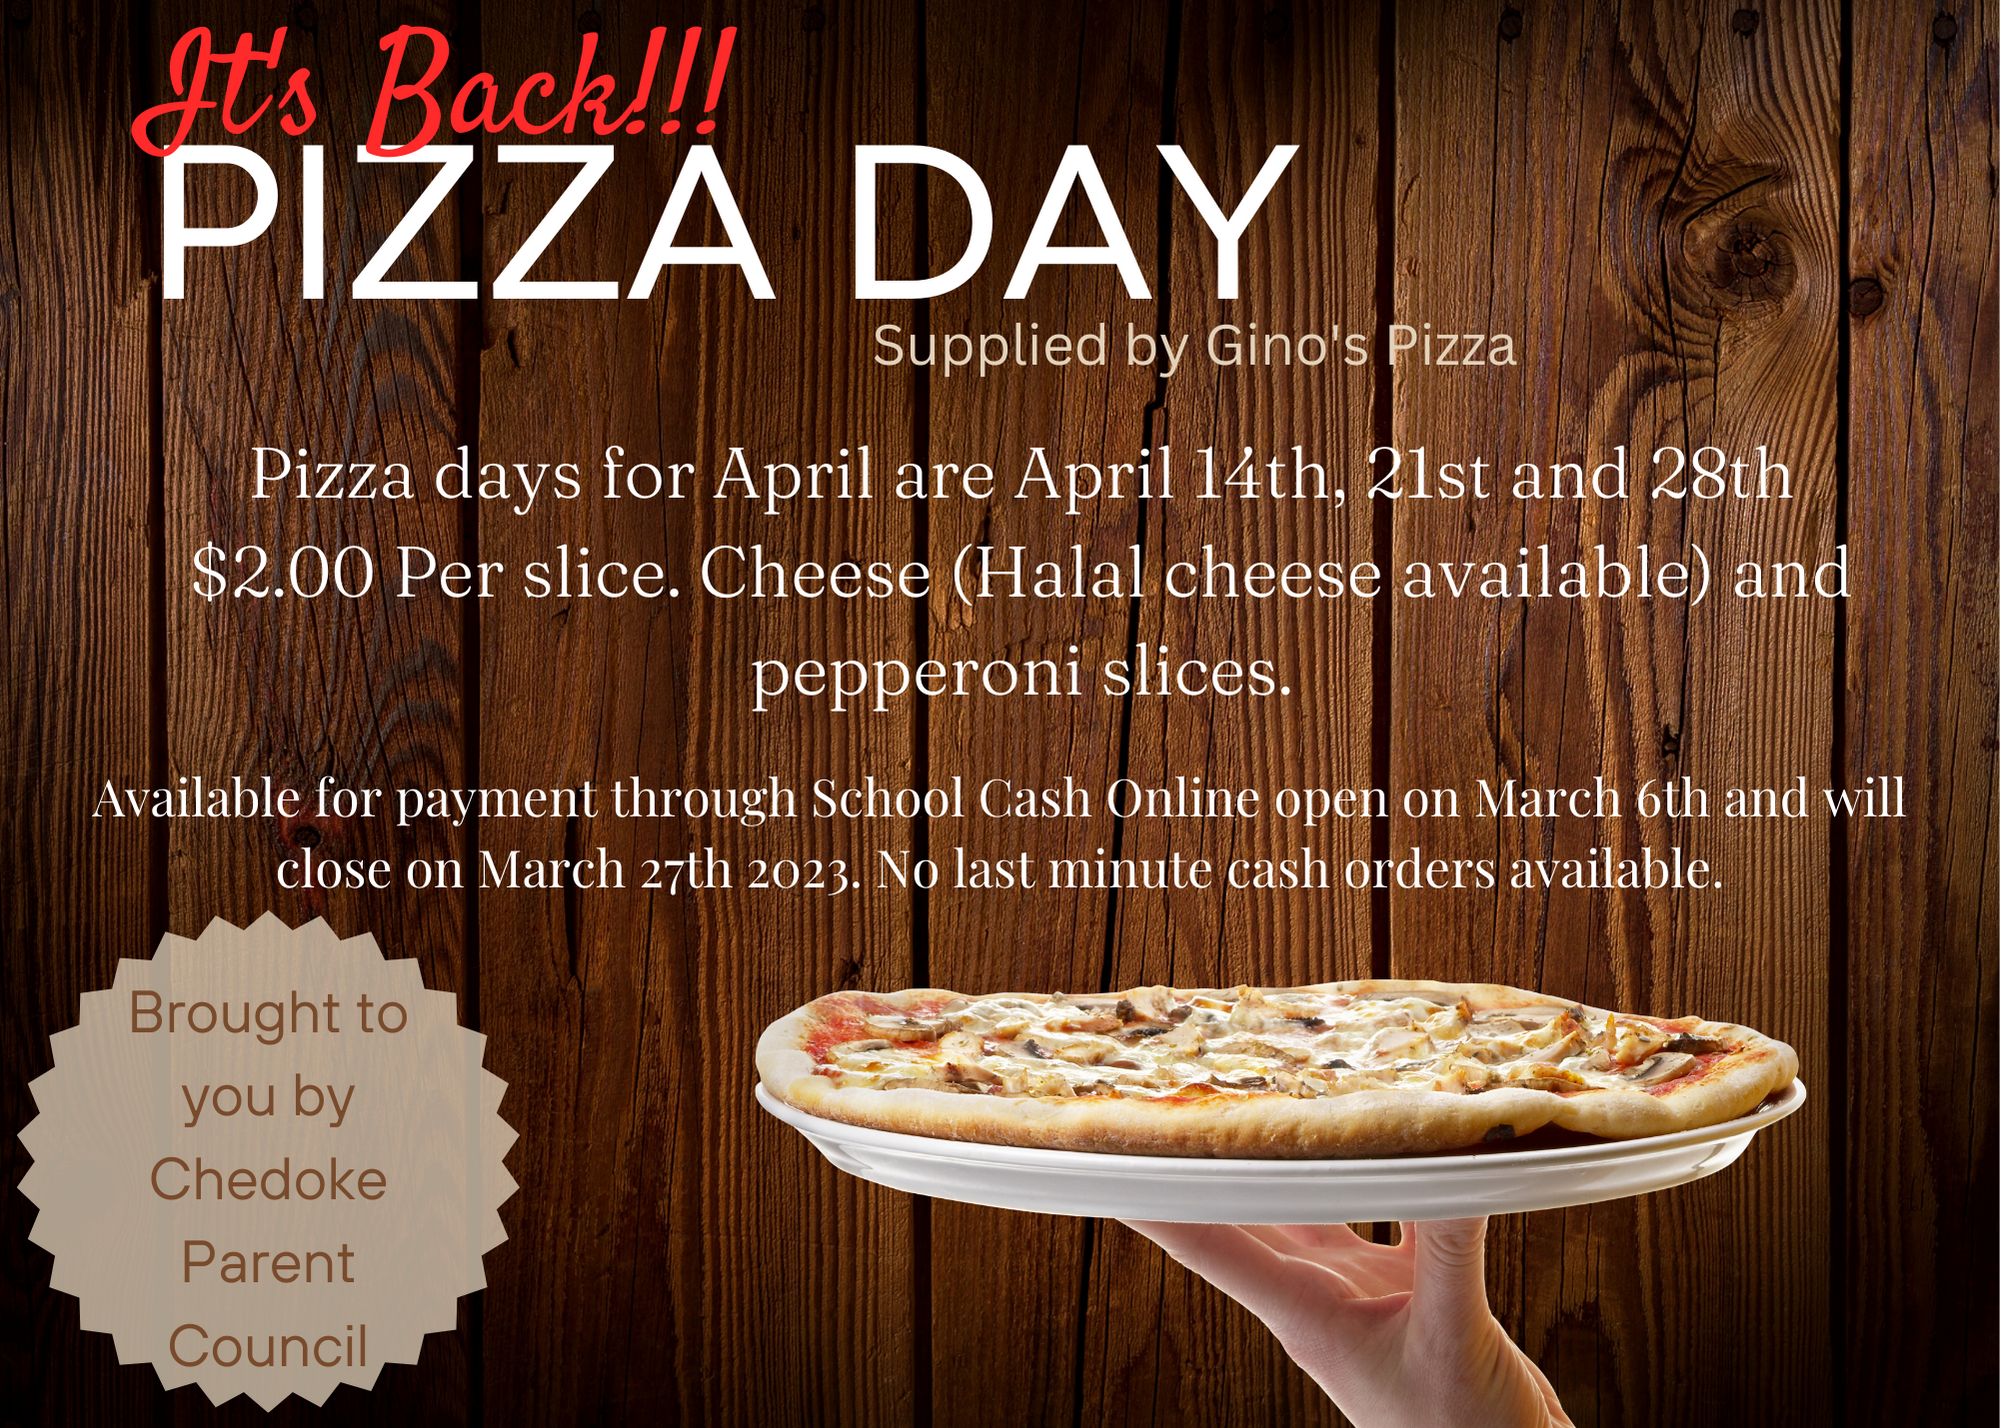 April brought pizza